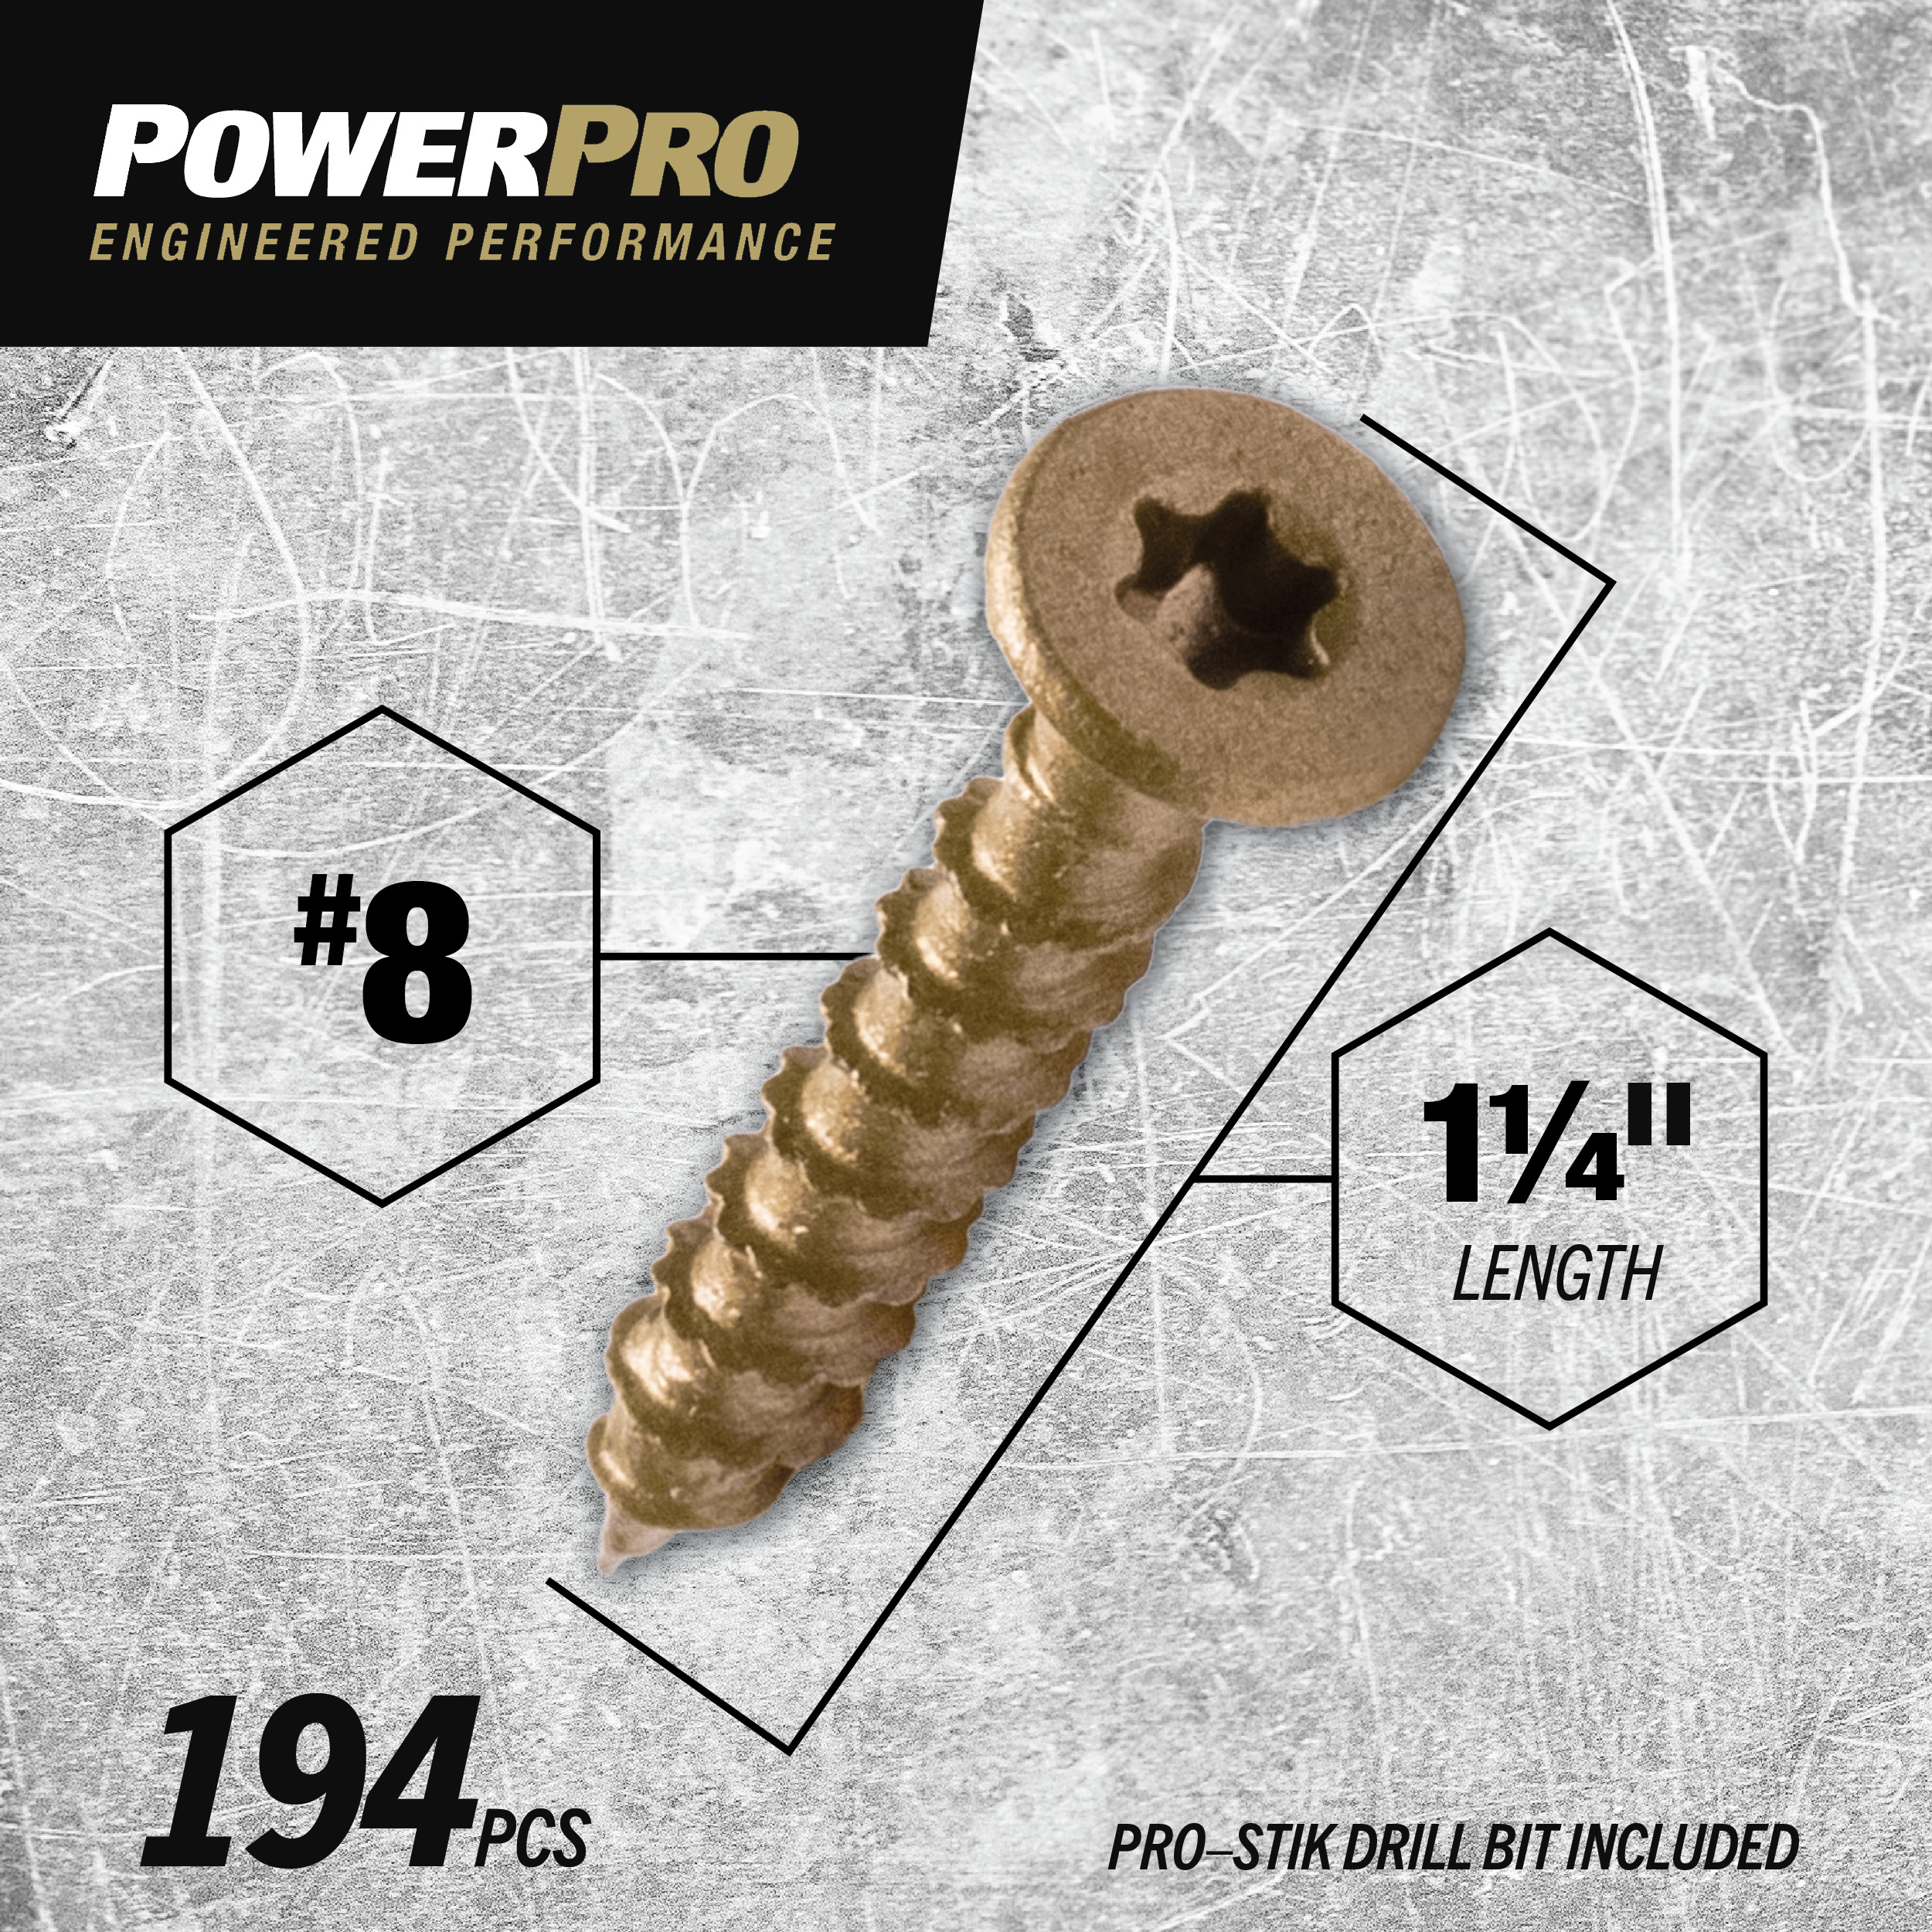 Power Pro Screws, Wood, Exterior, 3 Inch - 83 screws, 1 lb